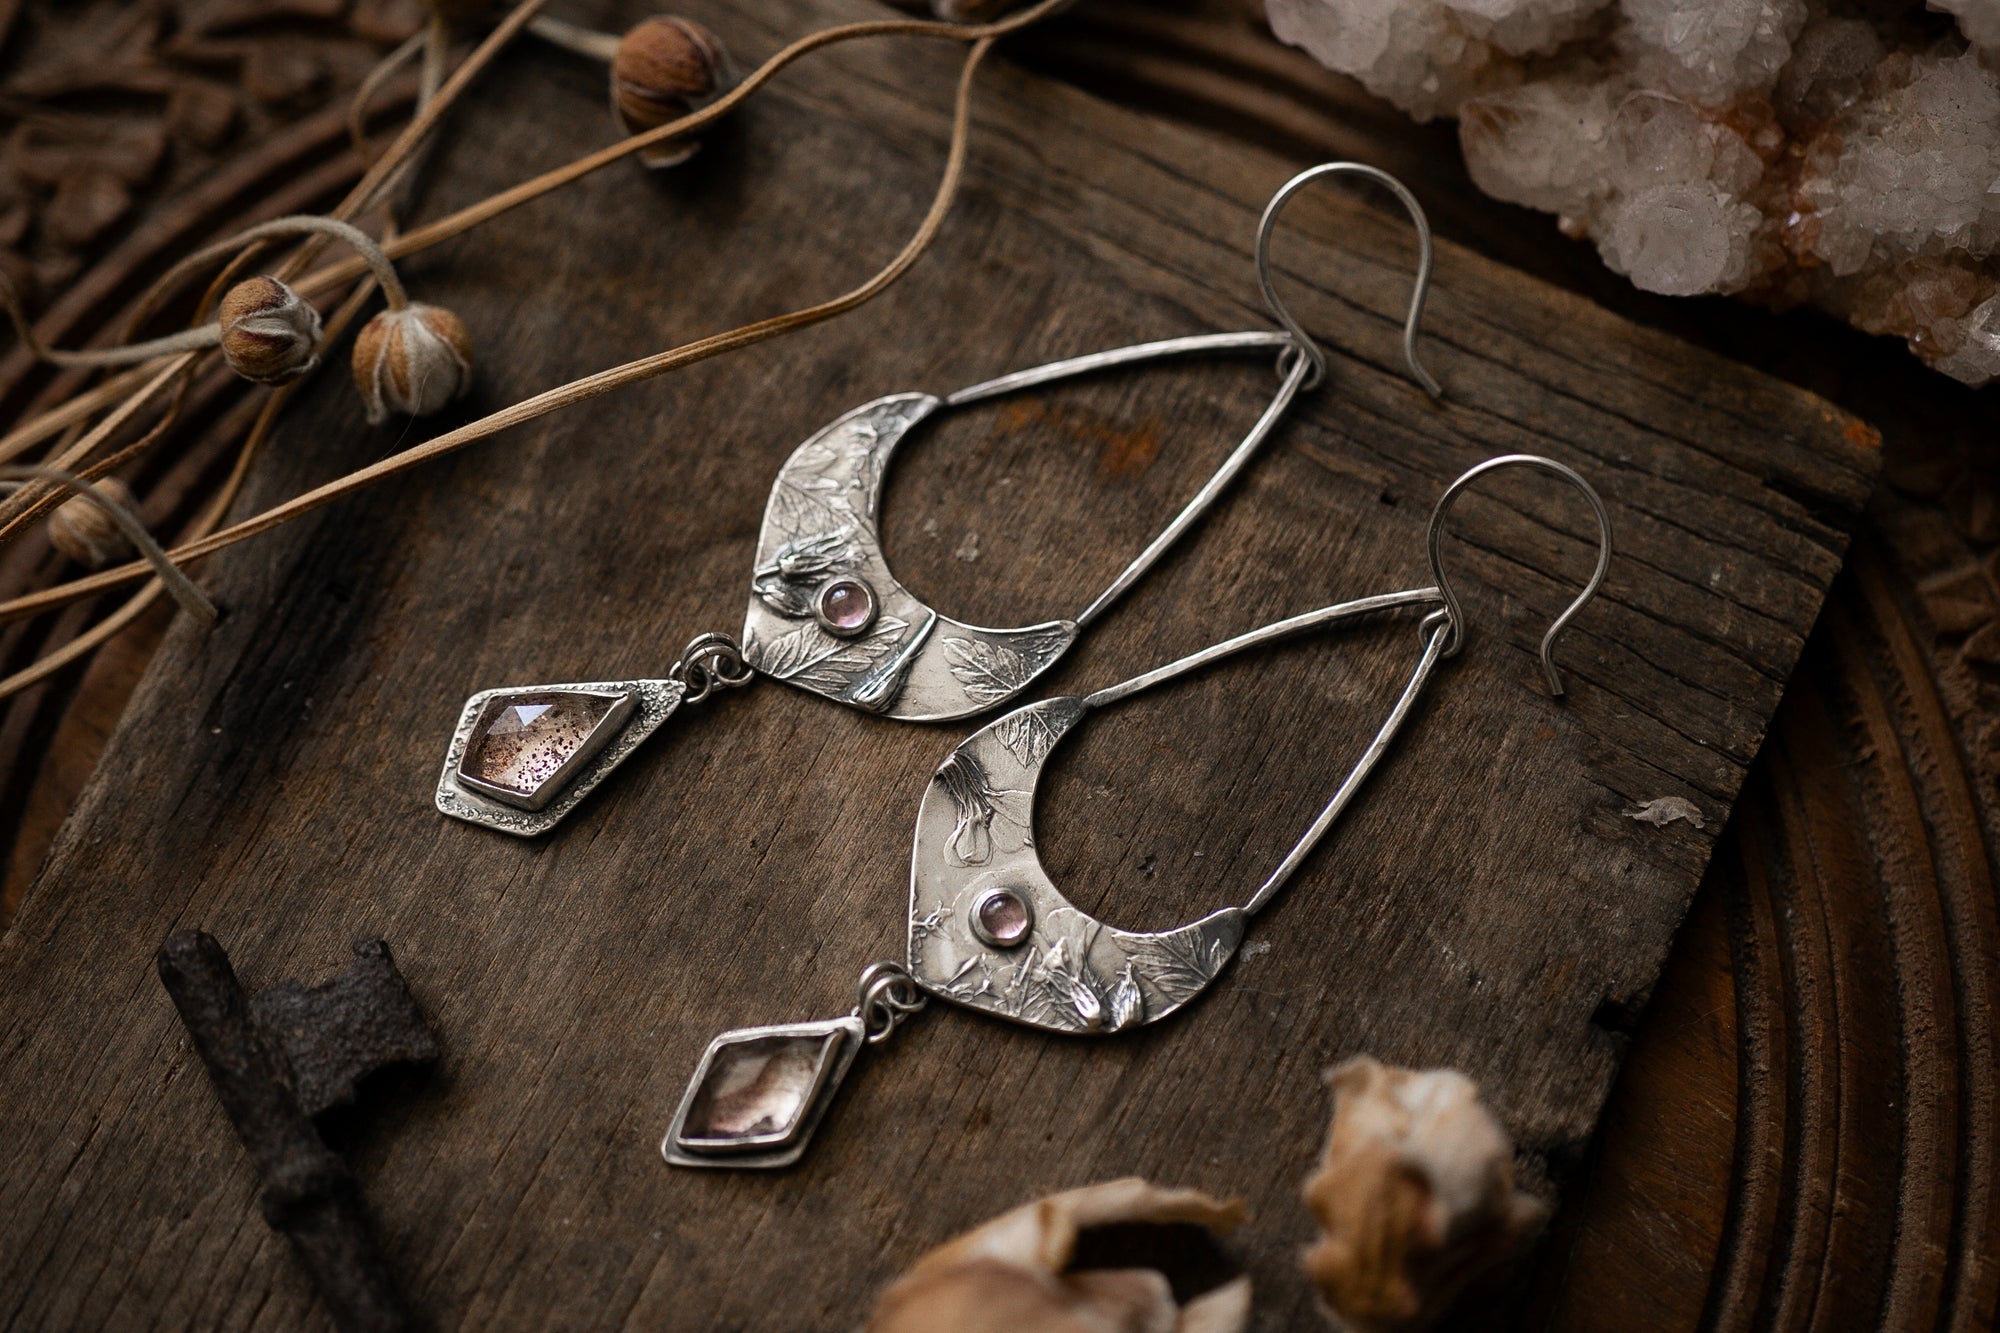 OOAK Herb Robert chandelier earrings - Amethyst & Super 7 quartz